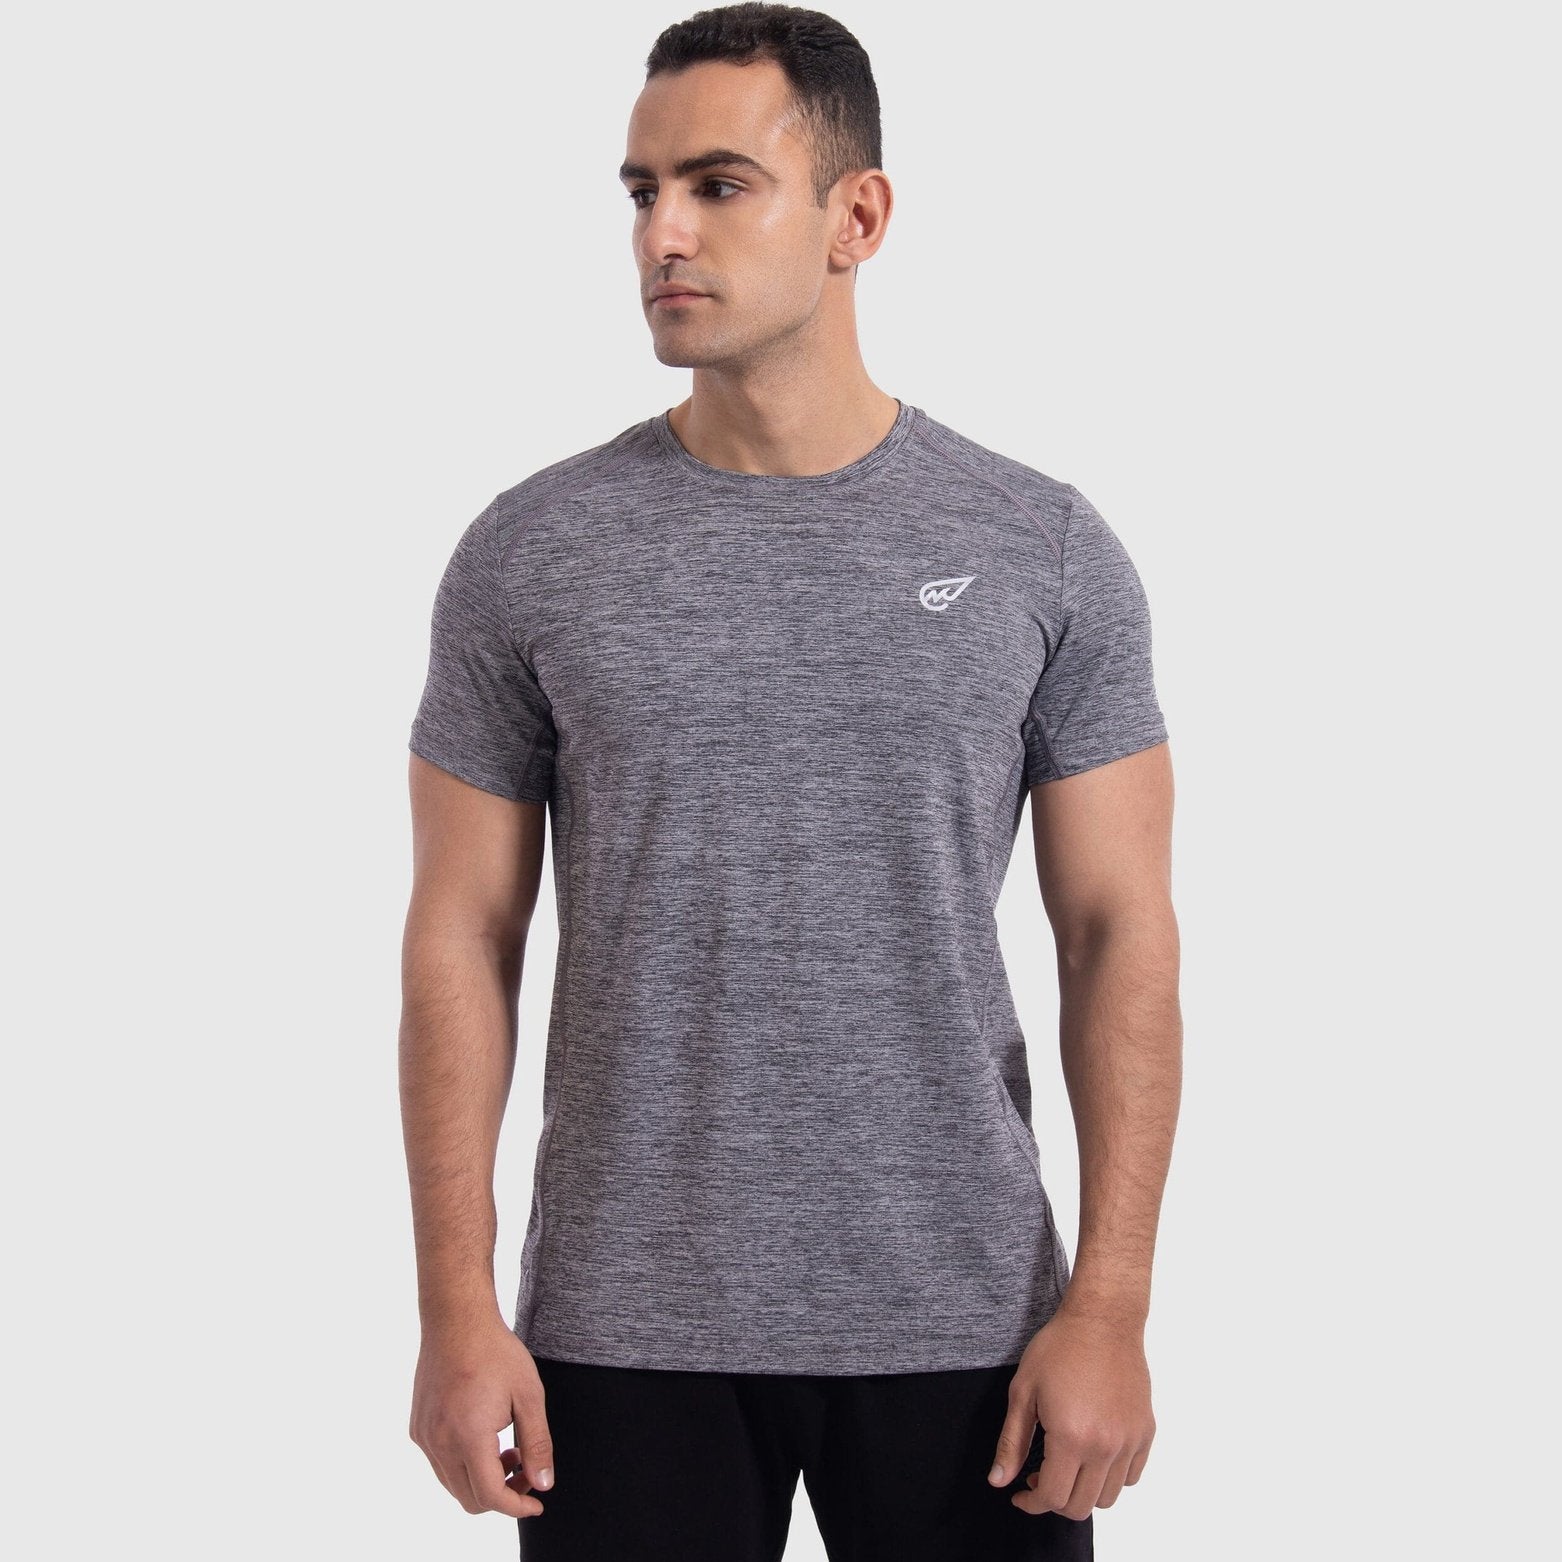 Training T-shirt in Grey